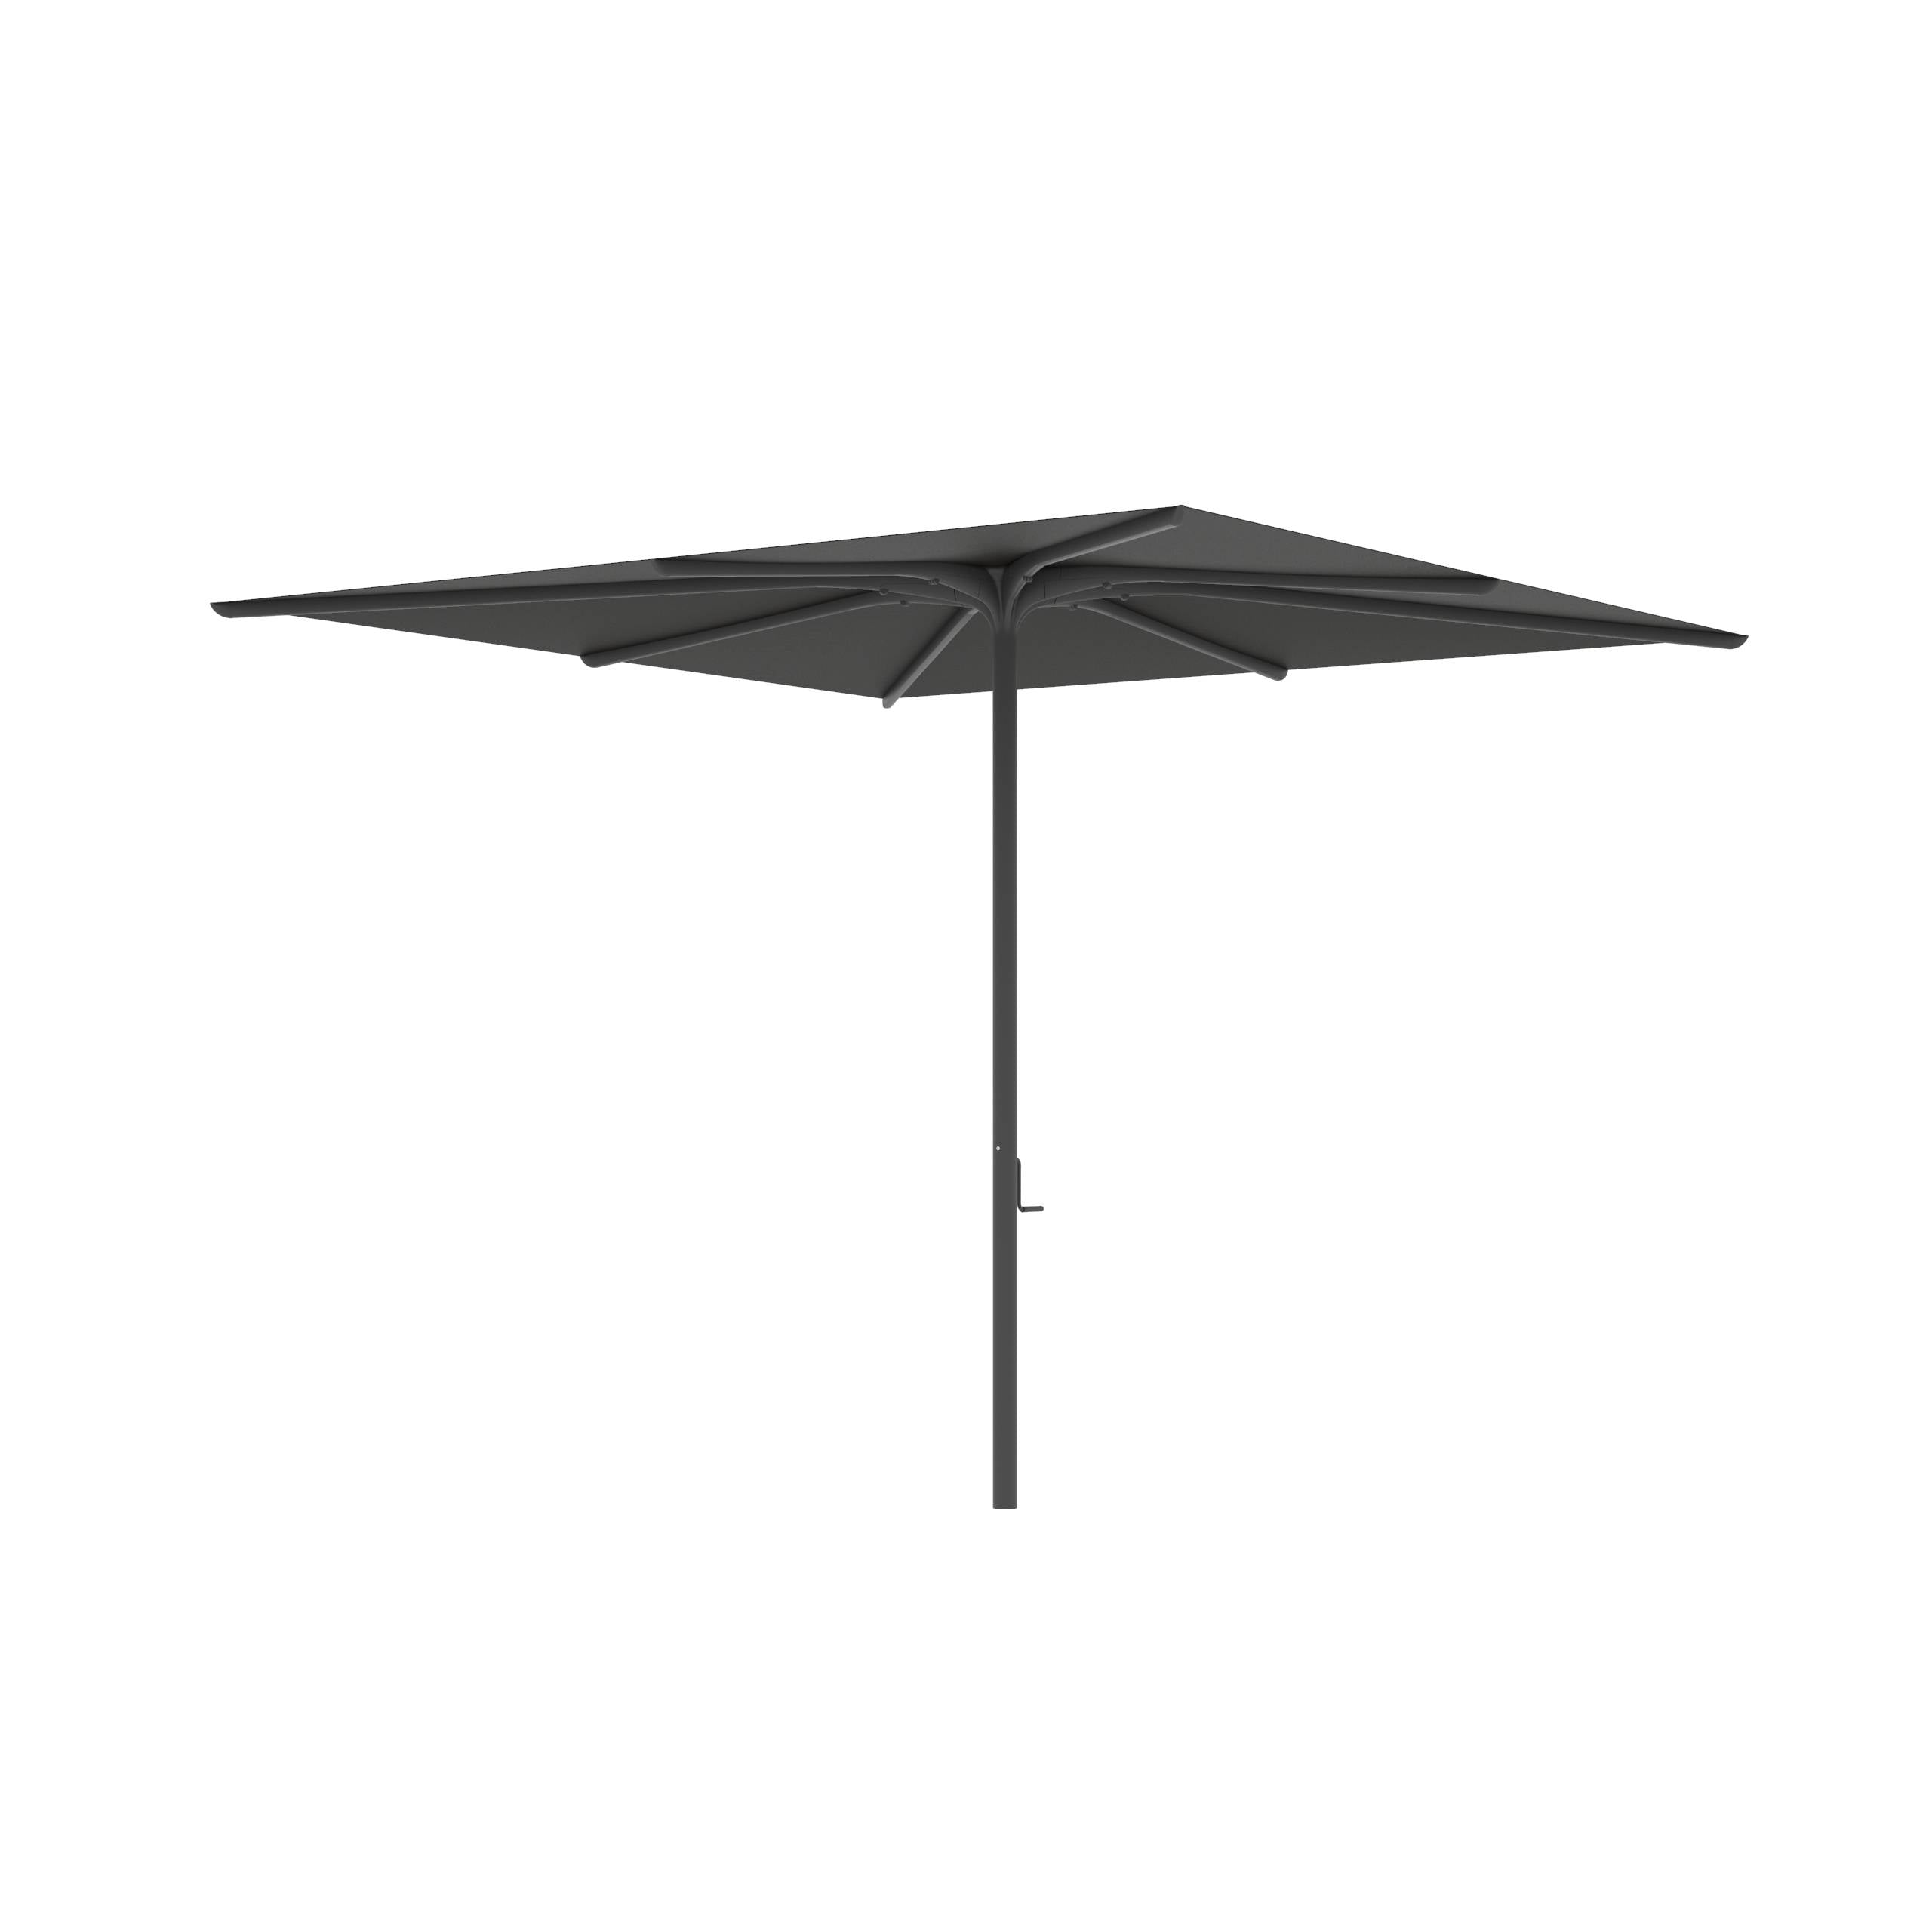 Bloom 275v Umbrella Coated Anthracite Cover Black